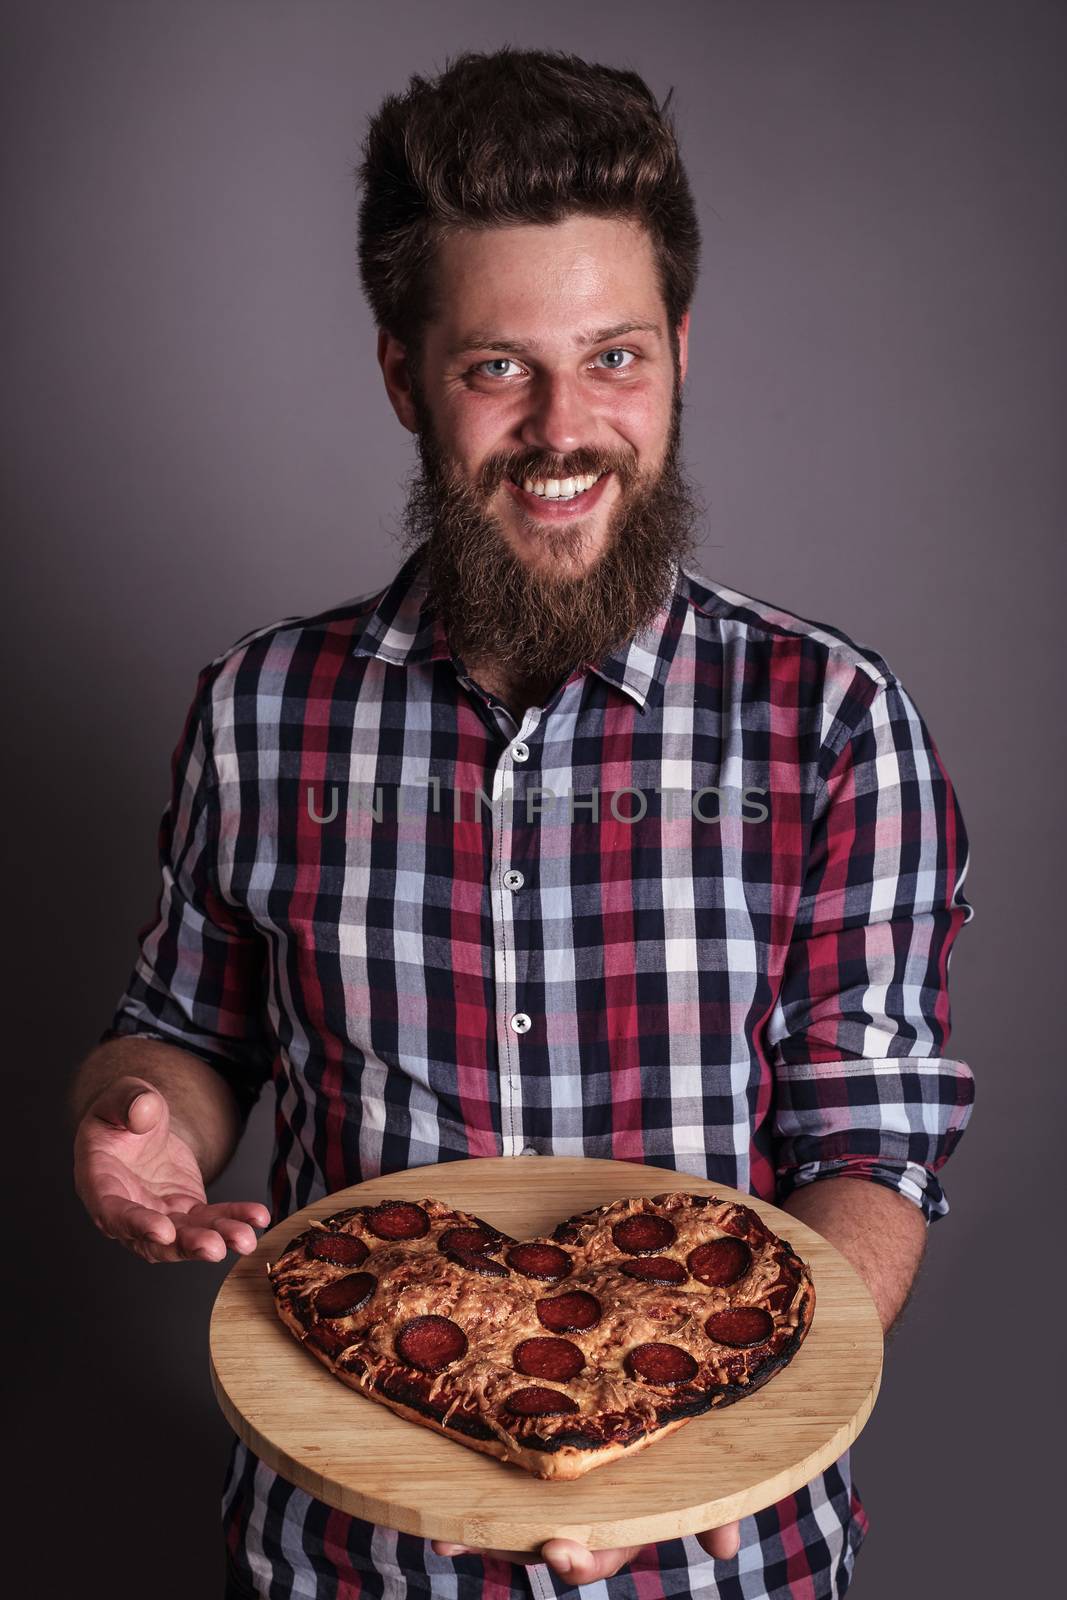 Man gives heart shapes pizza by destillat